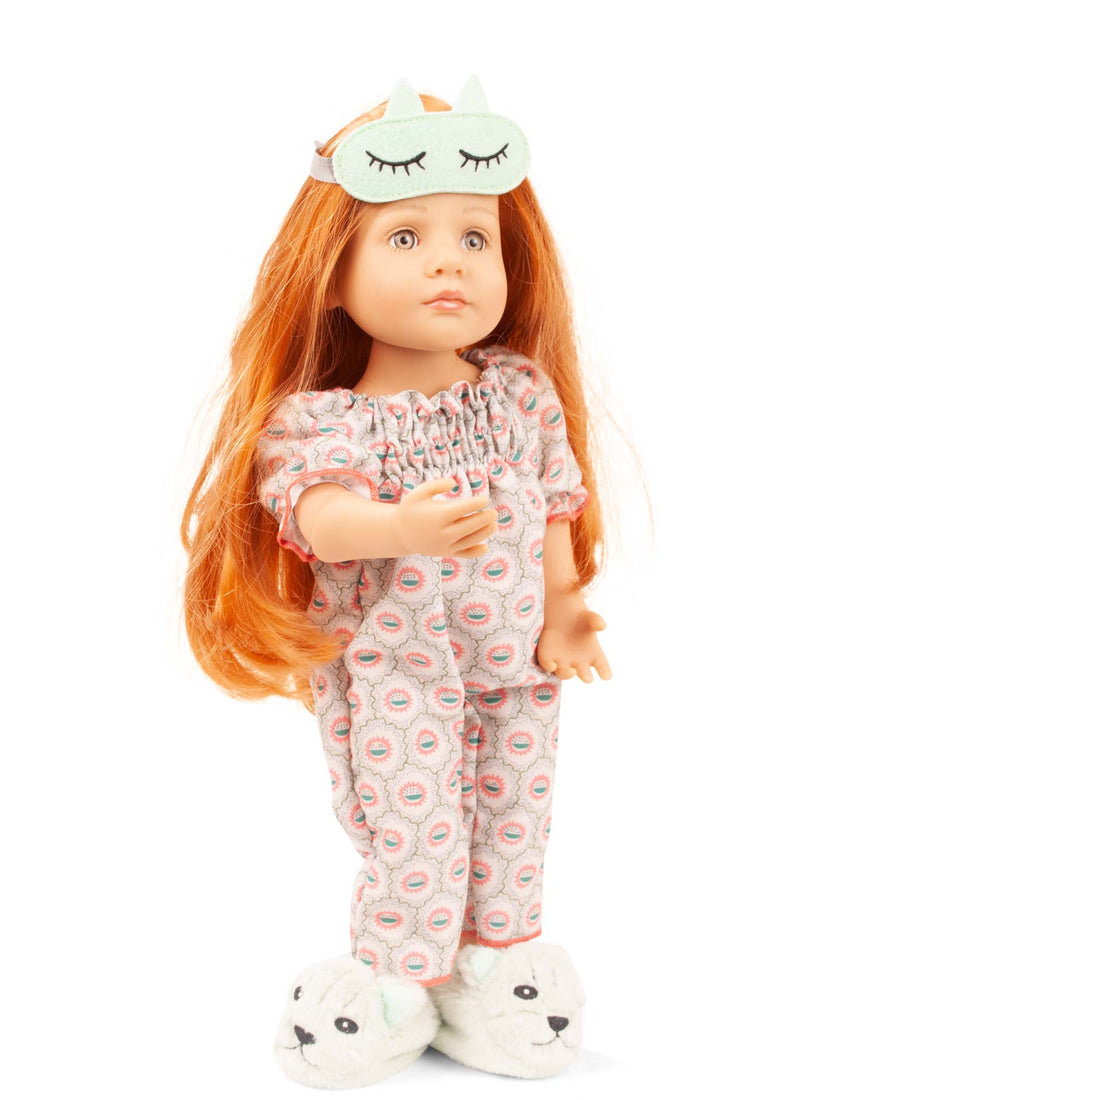 Handcrafted Doll - Little Kidz Götz Girl - Pyjama Party